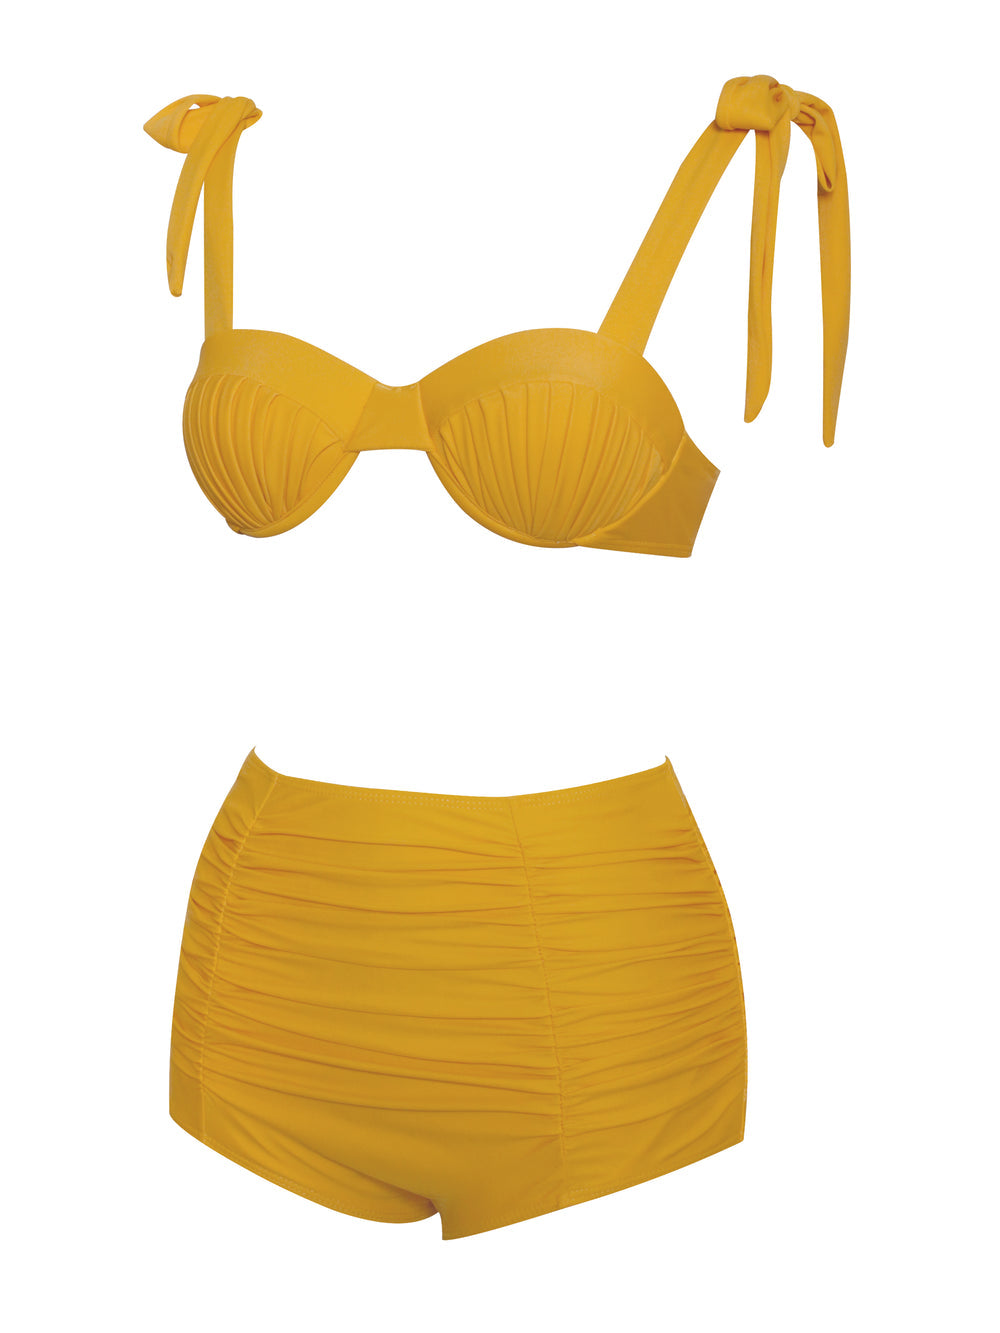 Milan Runched Yellow Bikini Bottom